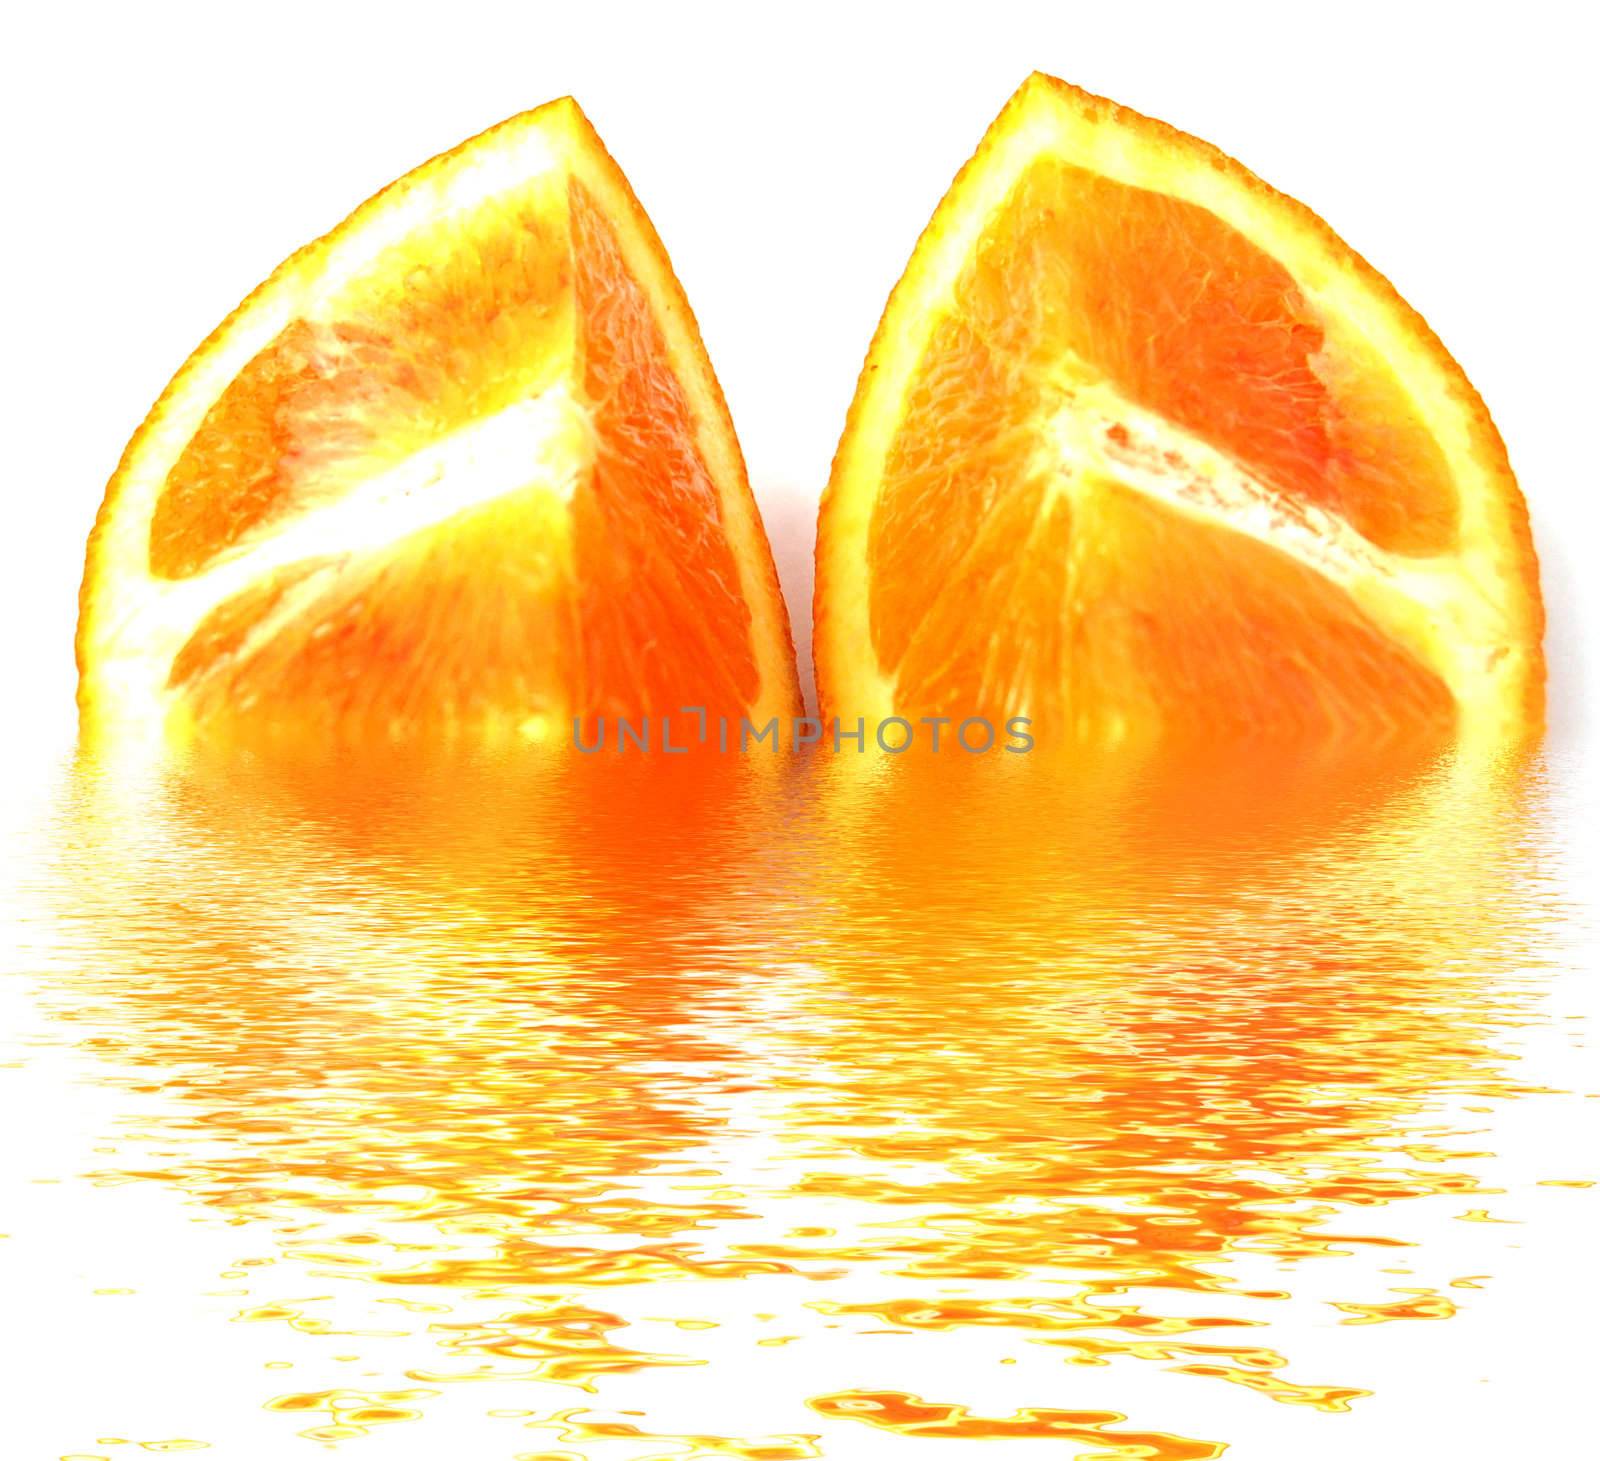 quarters of orange by mettus